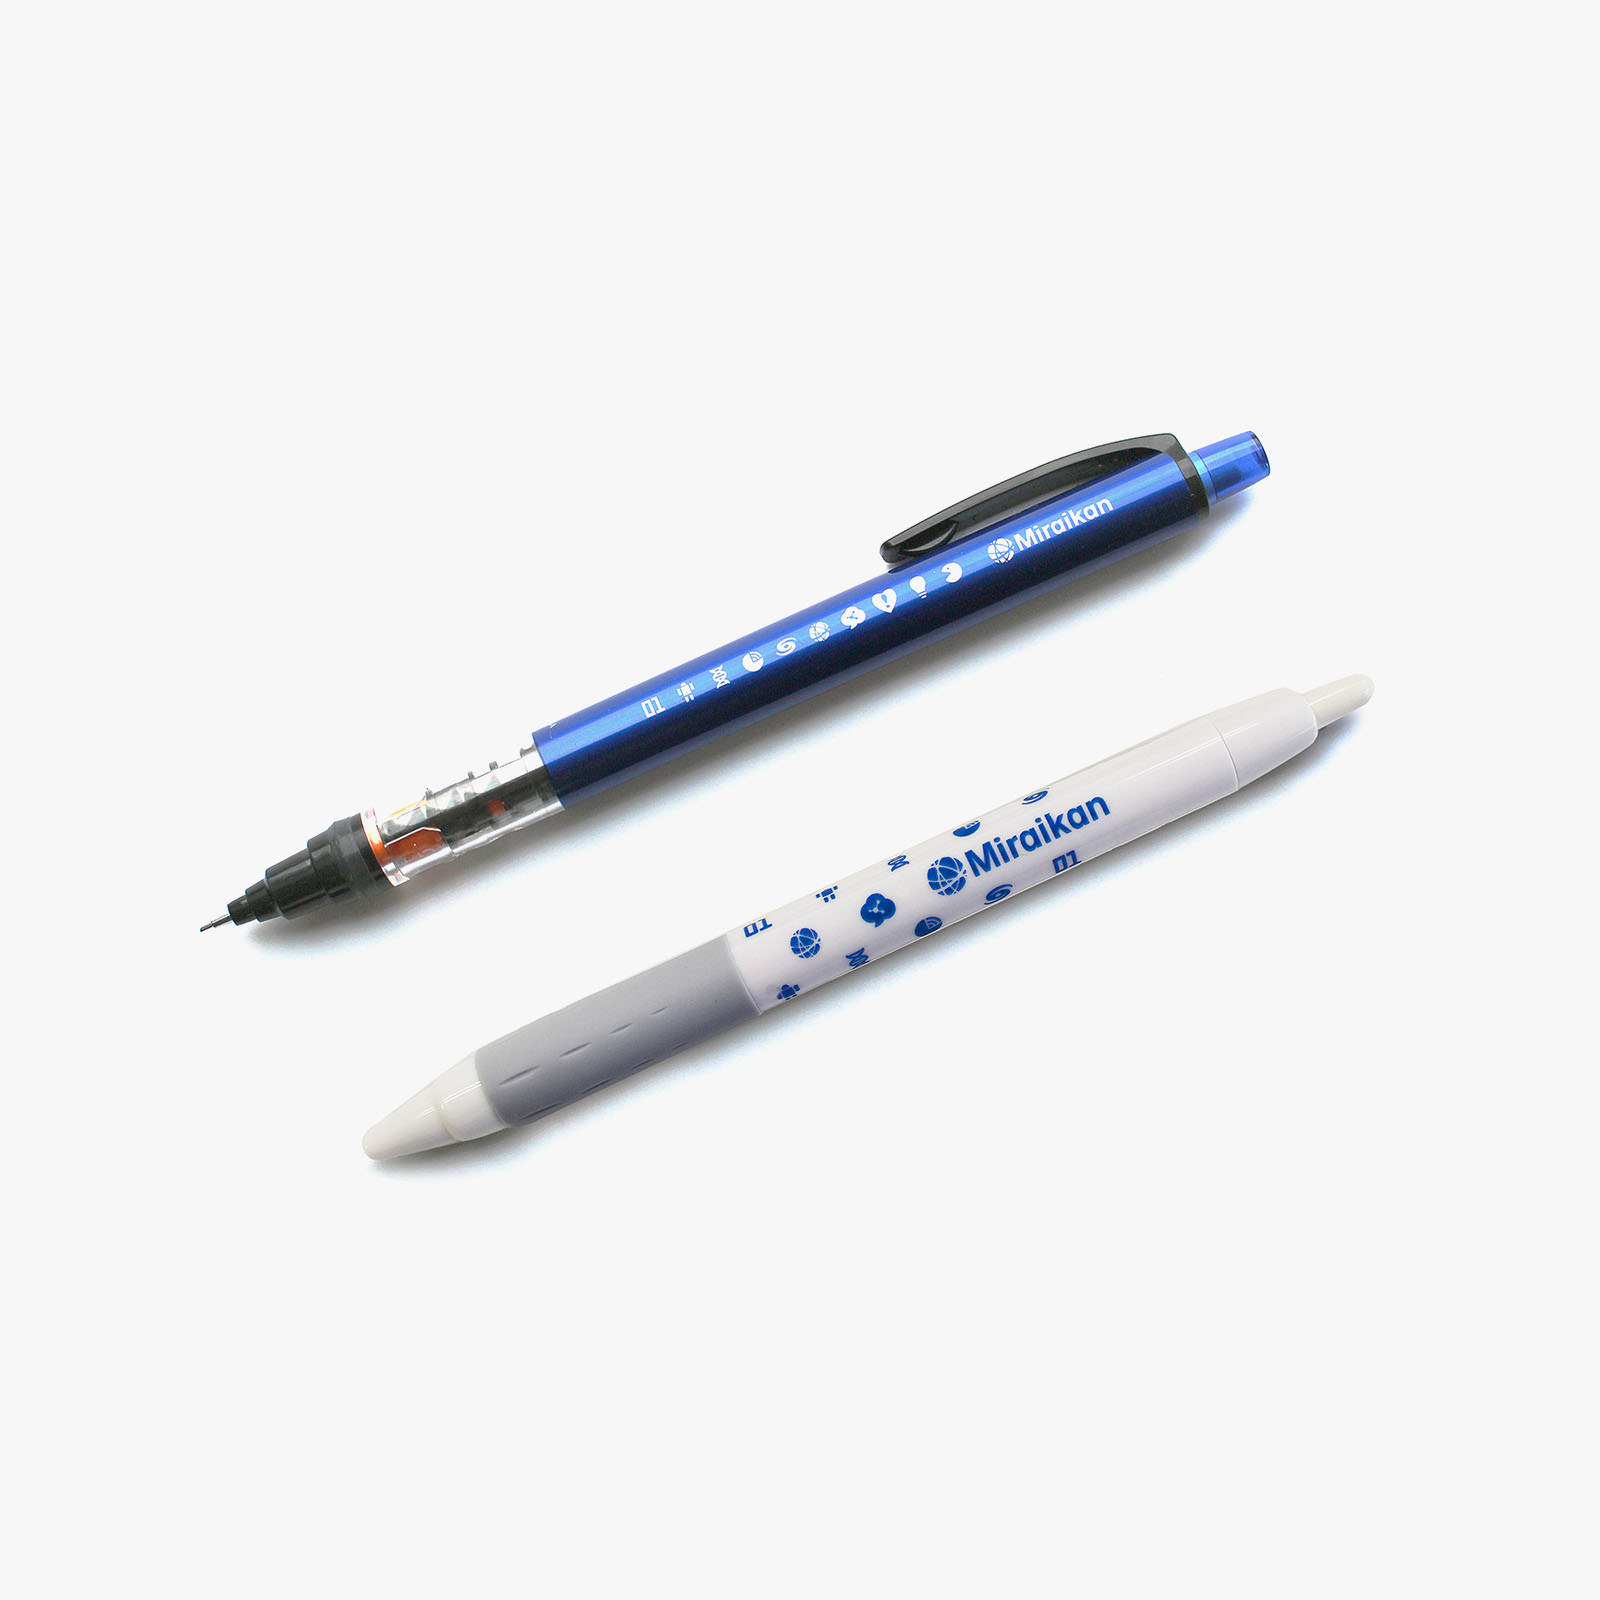 Miraikan Original KURUTOGA Mechanical Pencil Miraikan Oroginal JETSTREAM Ball-Point Pen